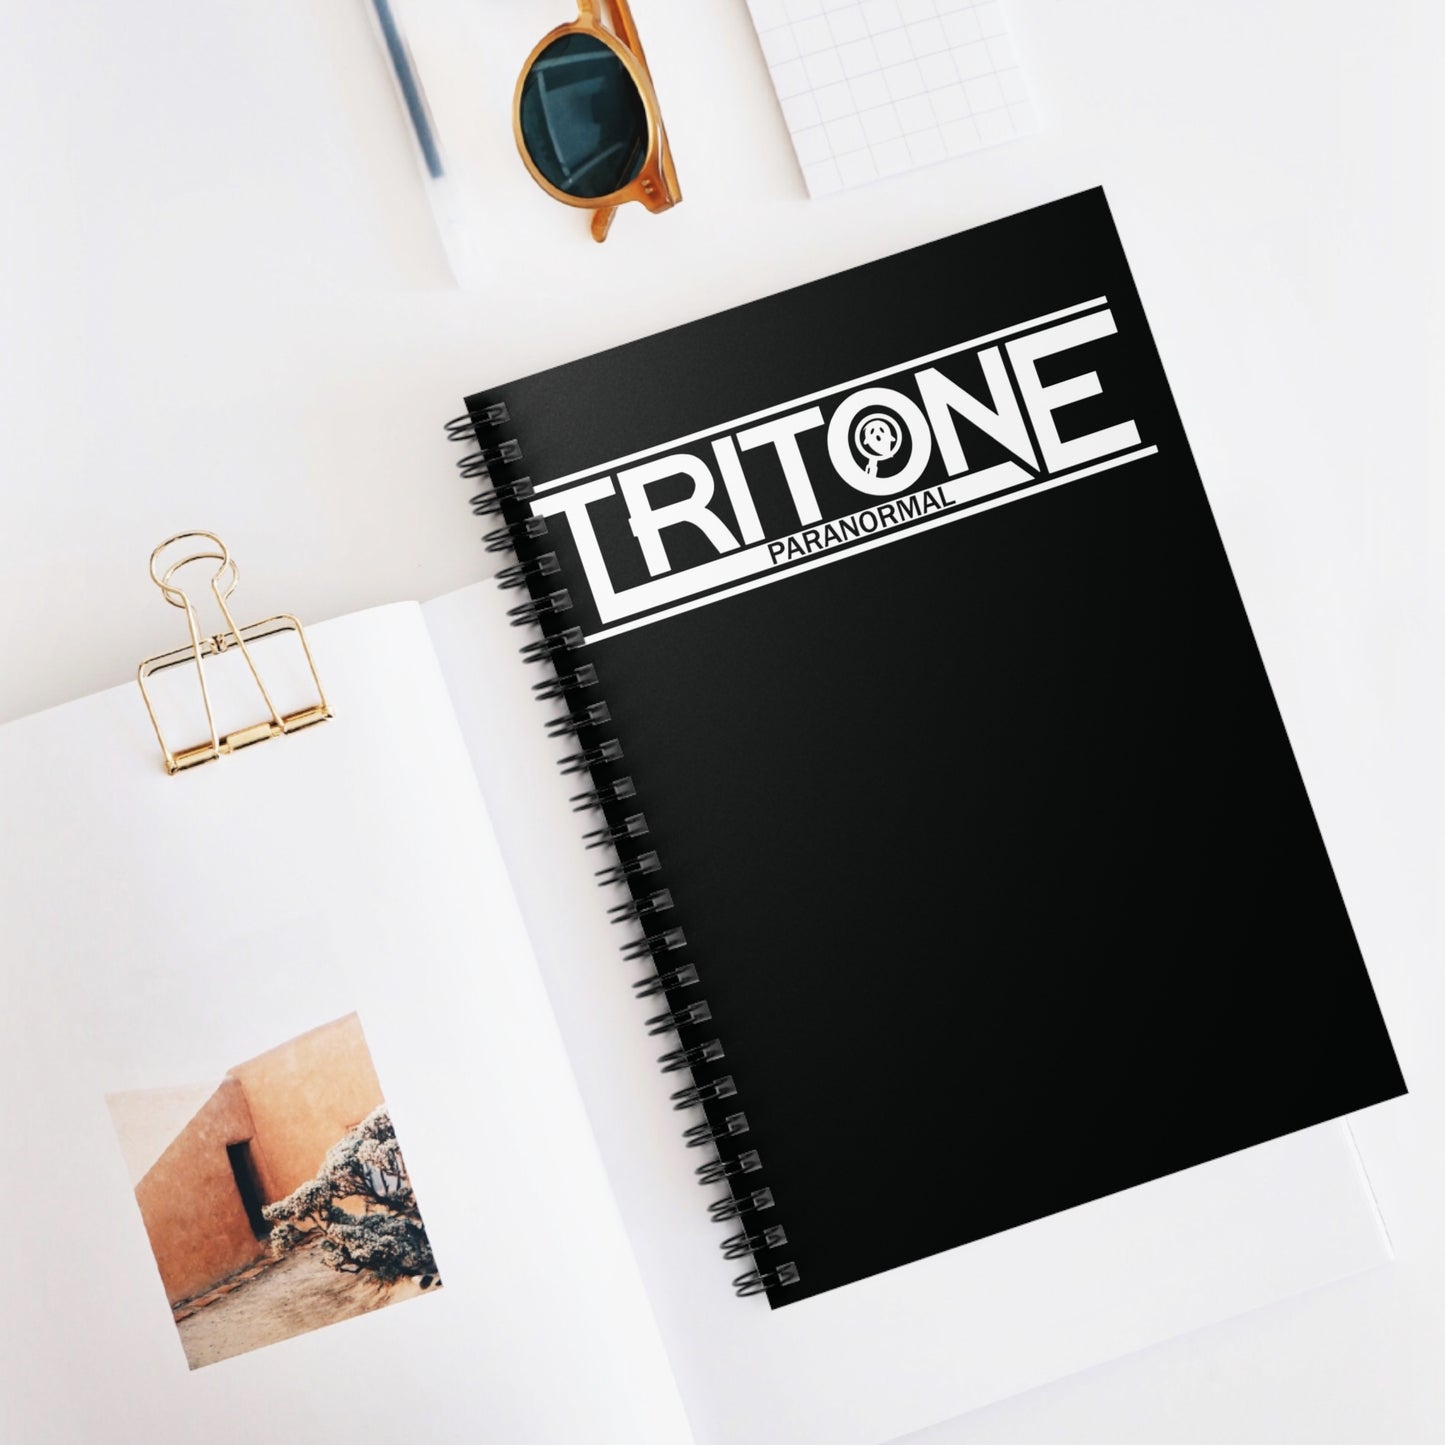 Tritone Paranormal Notebook